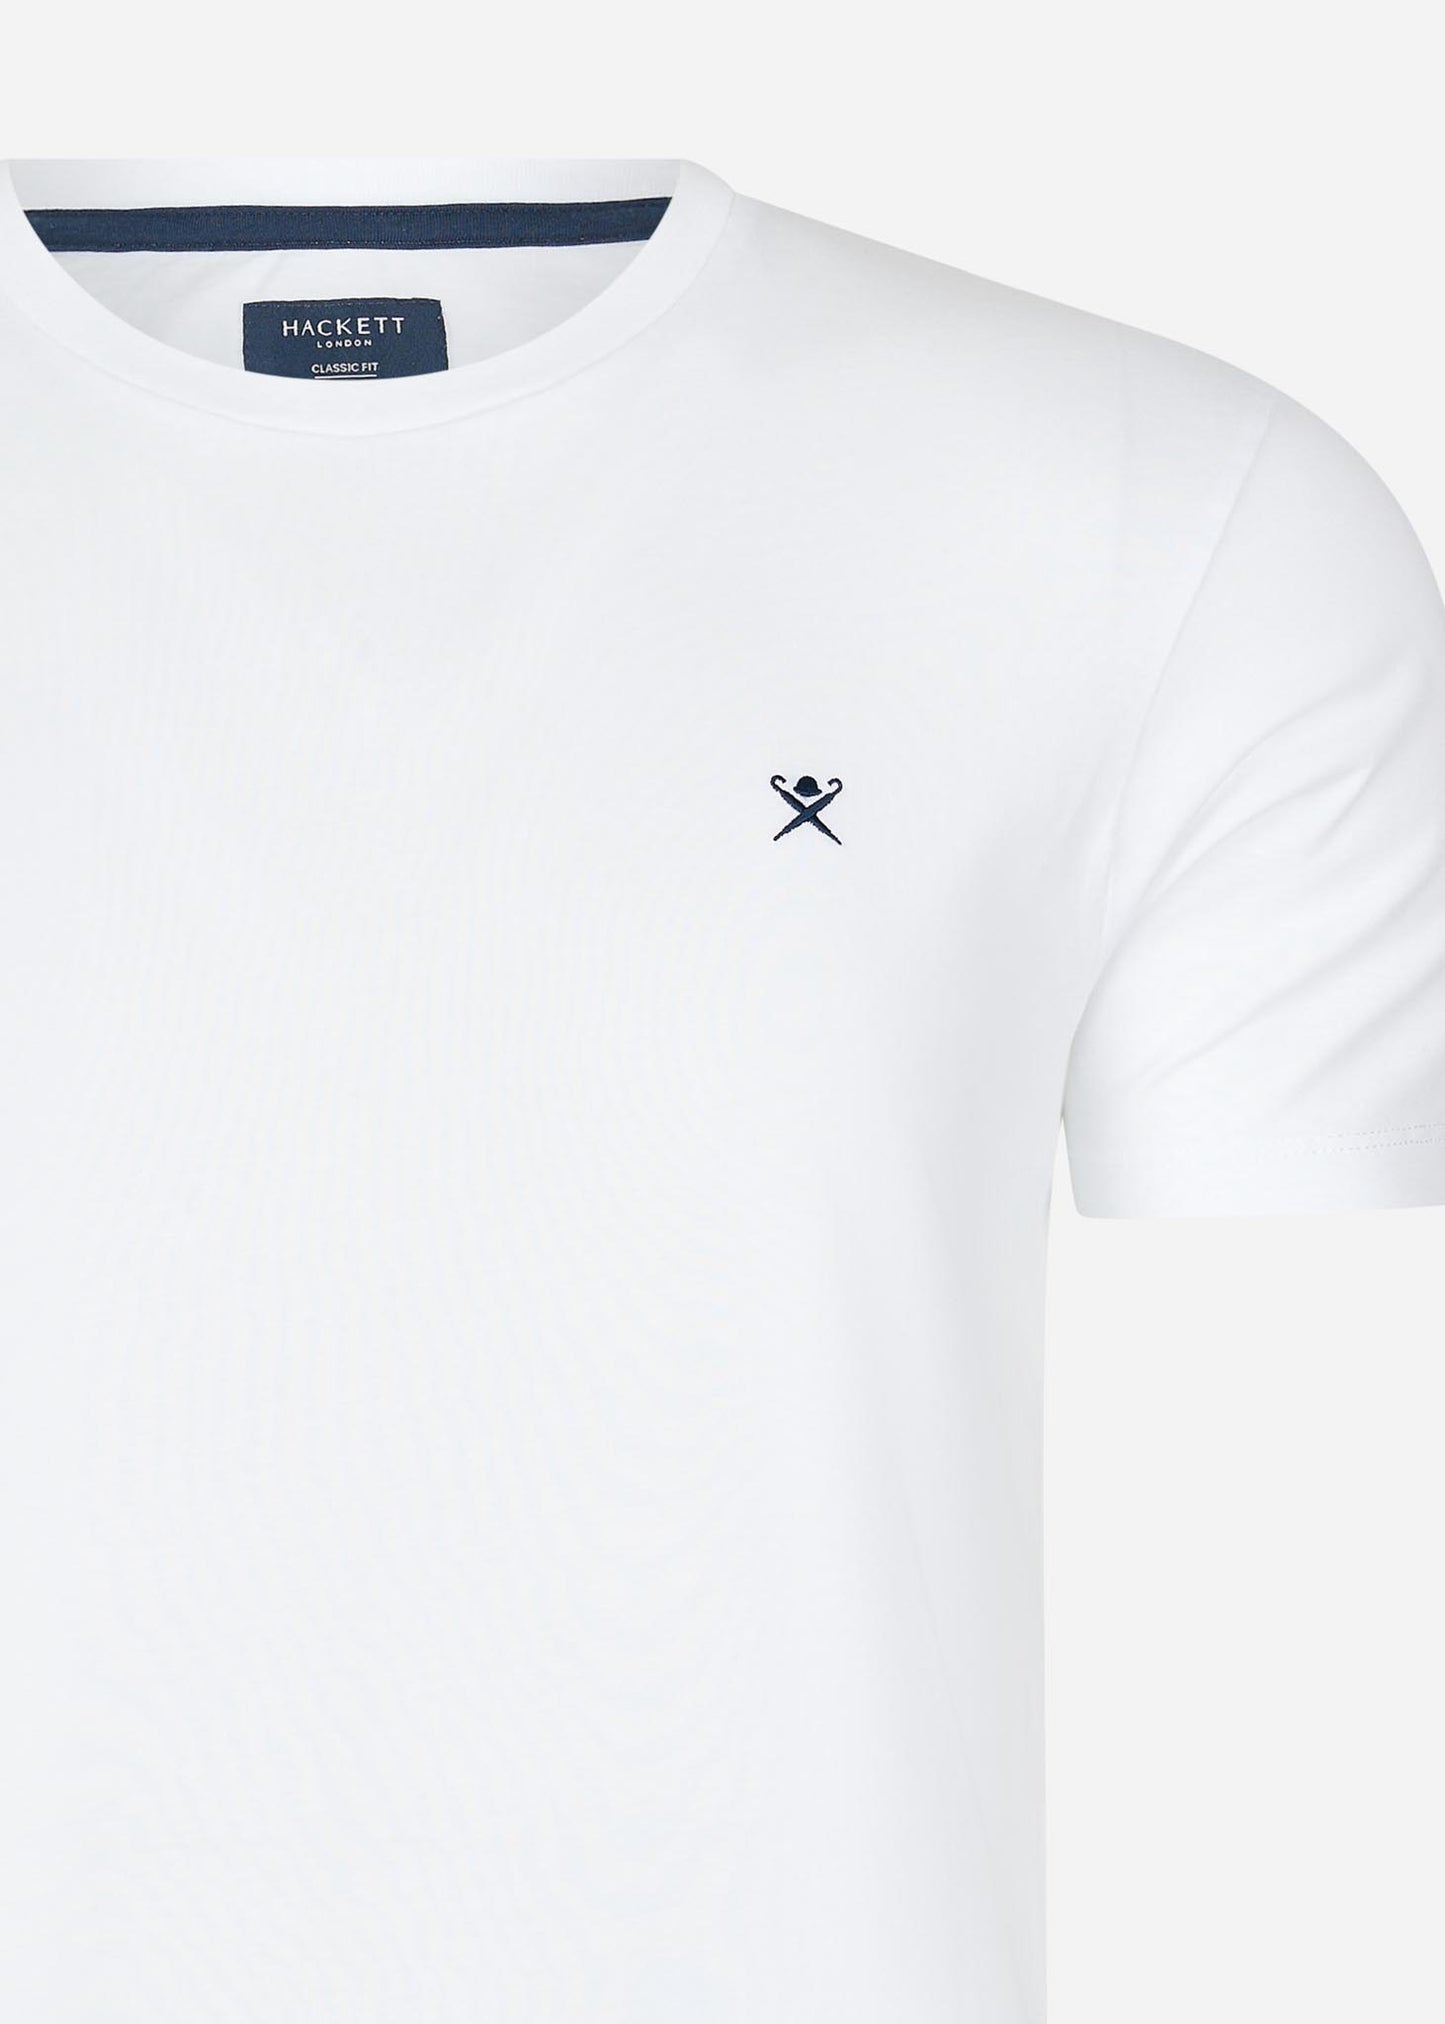 Hackett London T-shirts  Embroidered logo t-shirt - white 